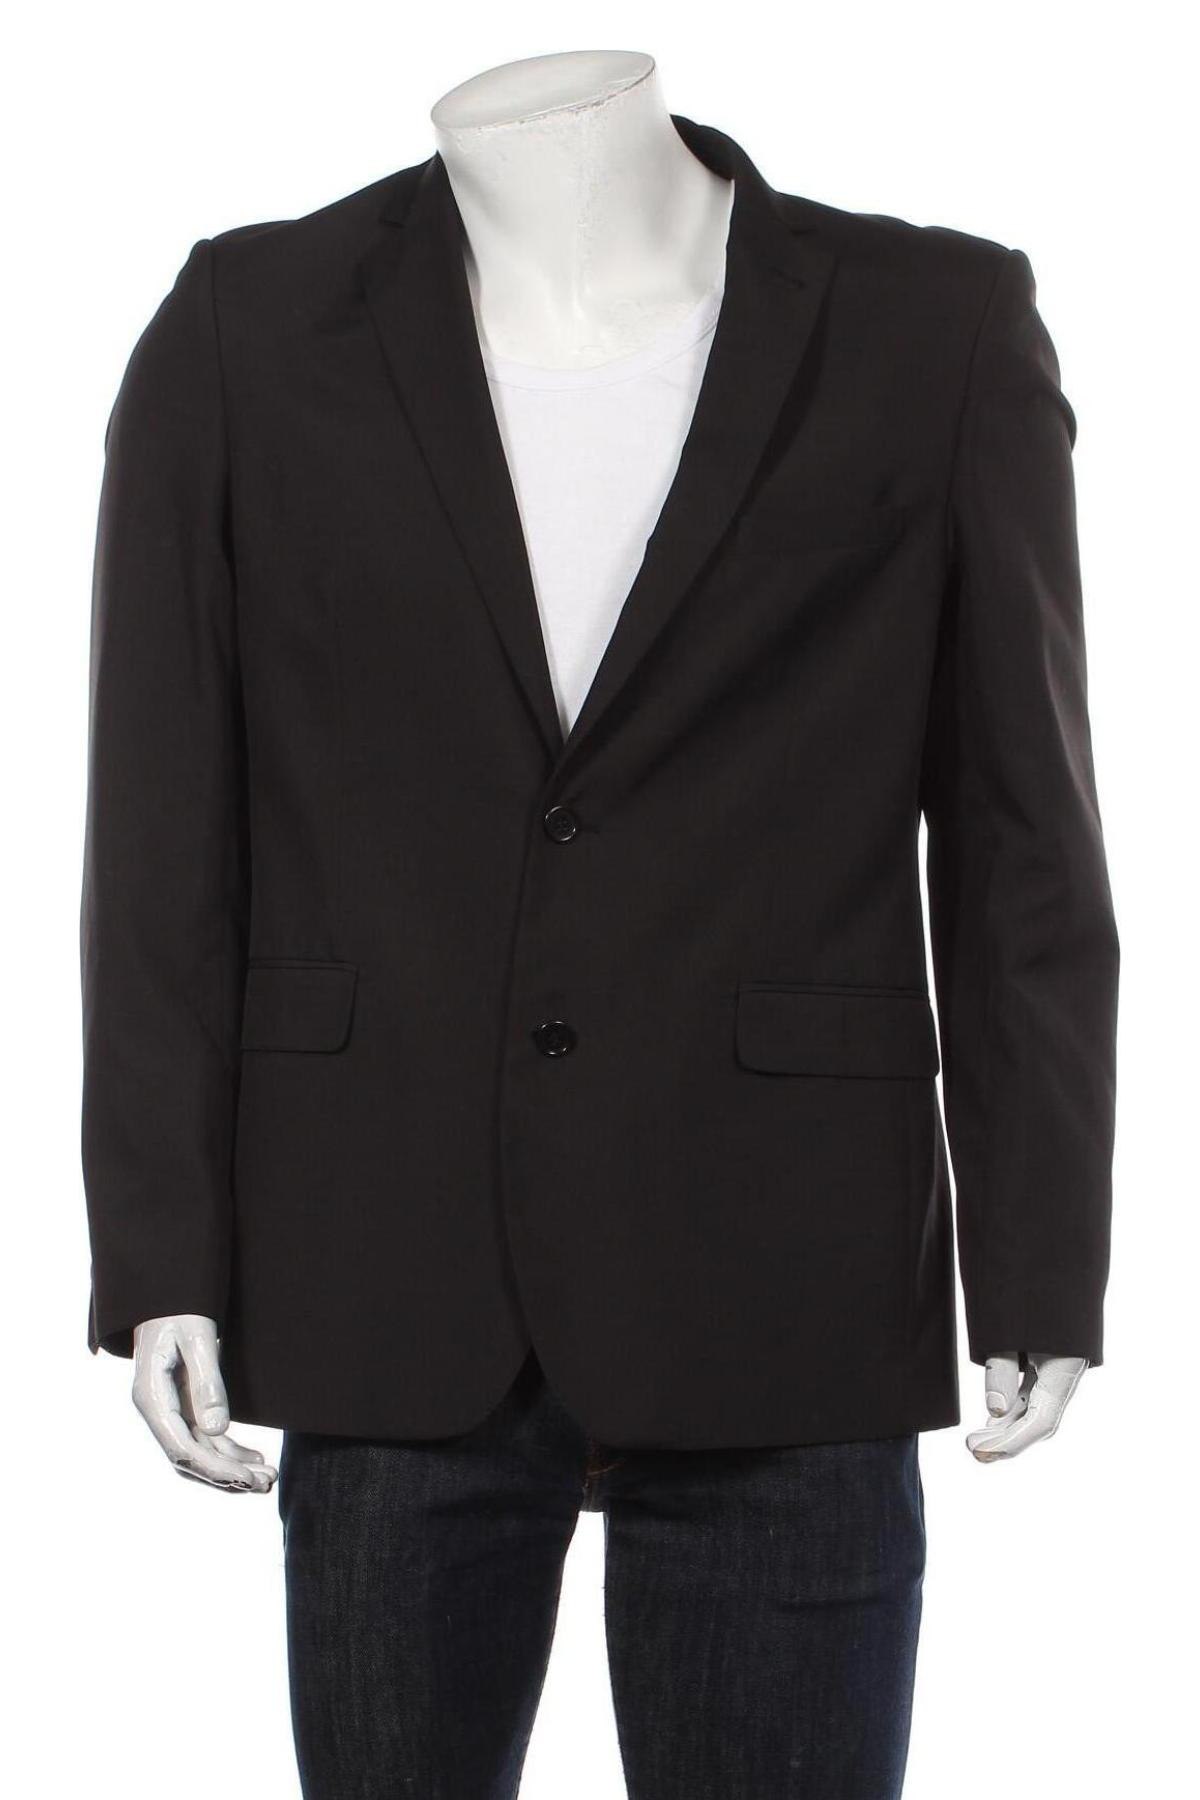 Cedar Wood State | Suits & Blazers | Designer Sports Jacket By Cedar Wood  State Tailored Fit | Poshmark